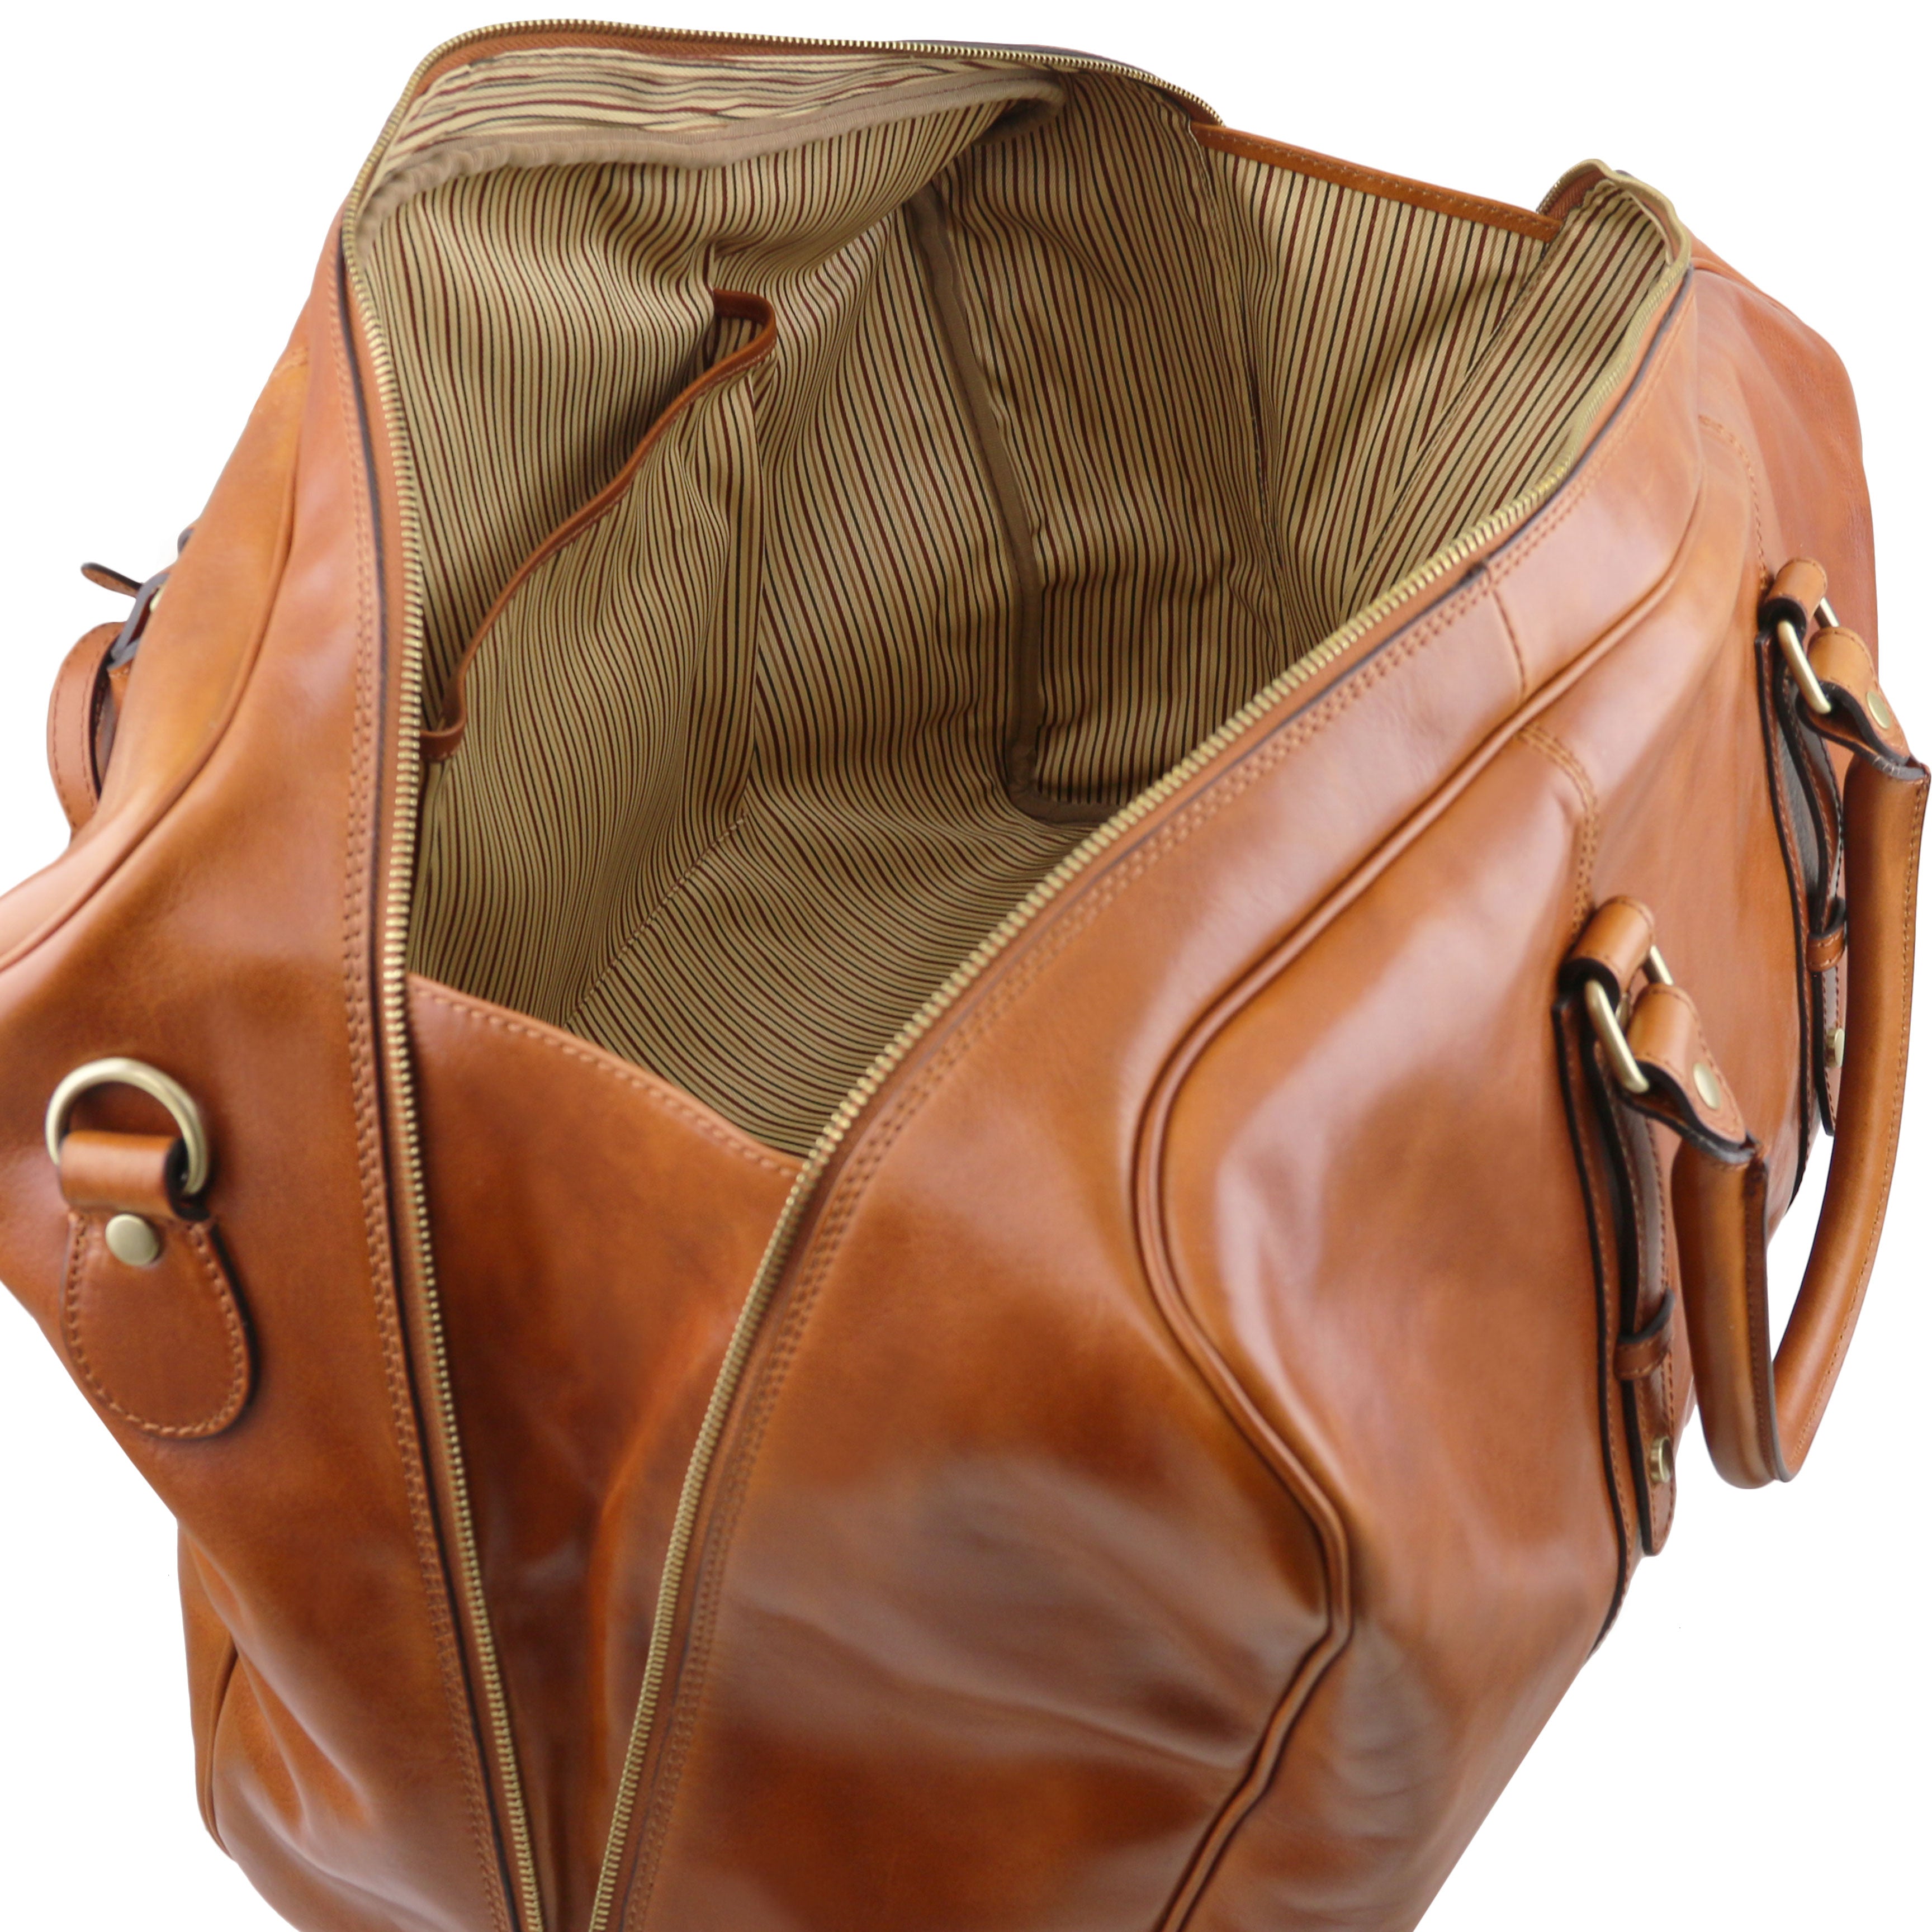 Brown large leather bag⎪TL Voyager